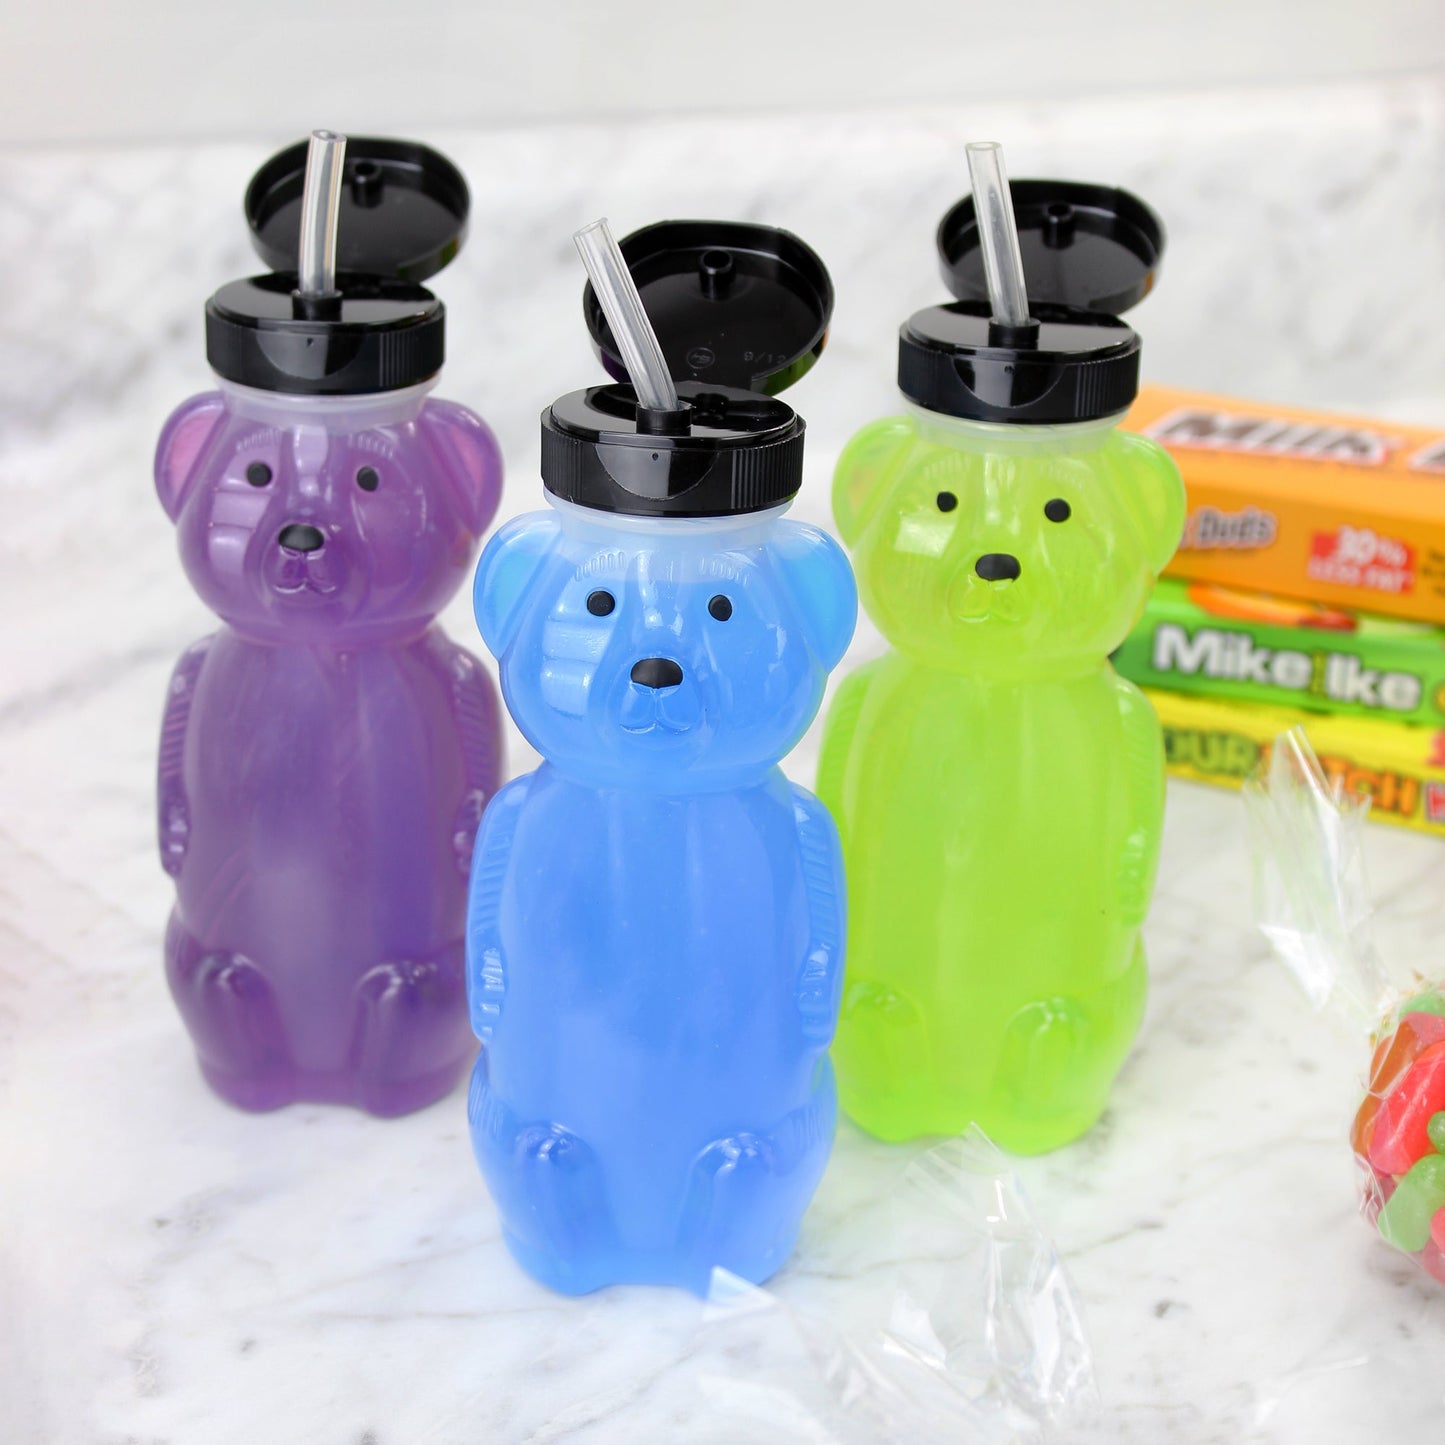 Honey Bear Straw Cups (3-Pack, Black Lids) - sh1337cb0aep